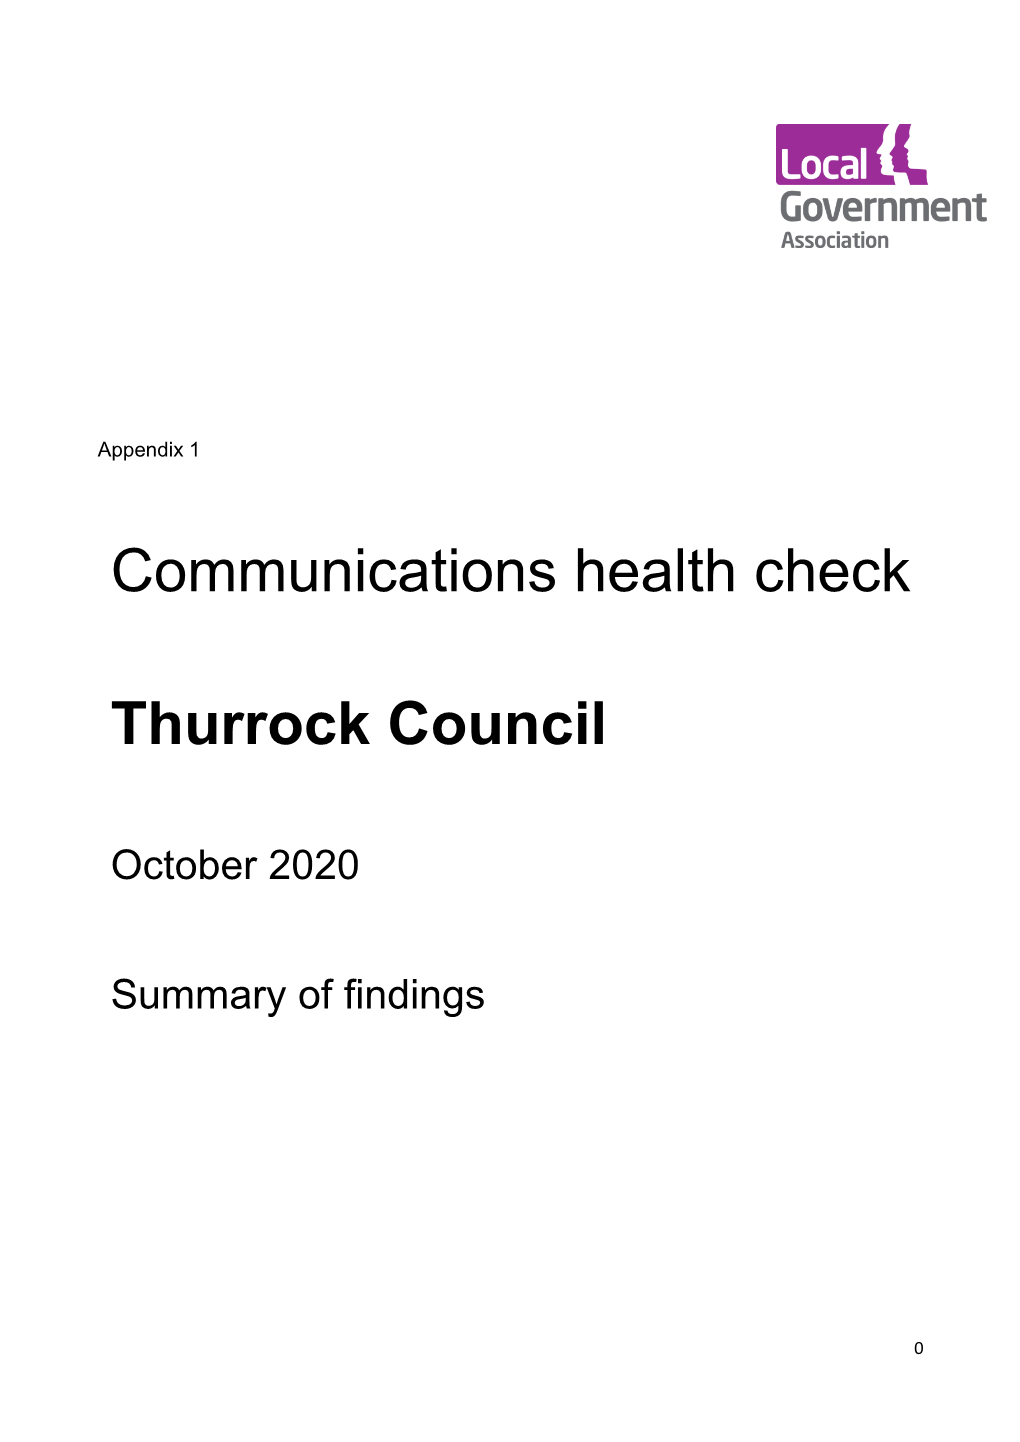 Communications Health Check Thurrock Council